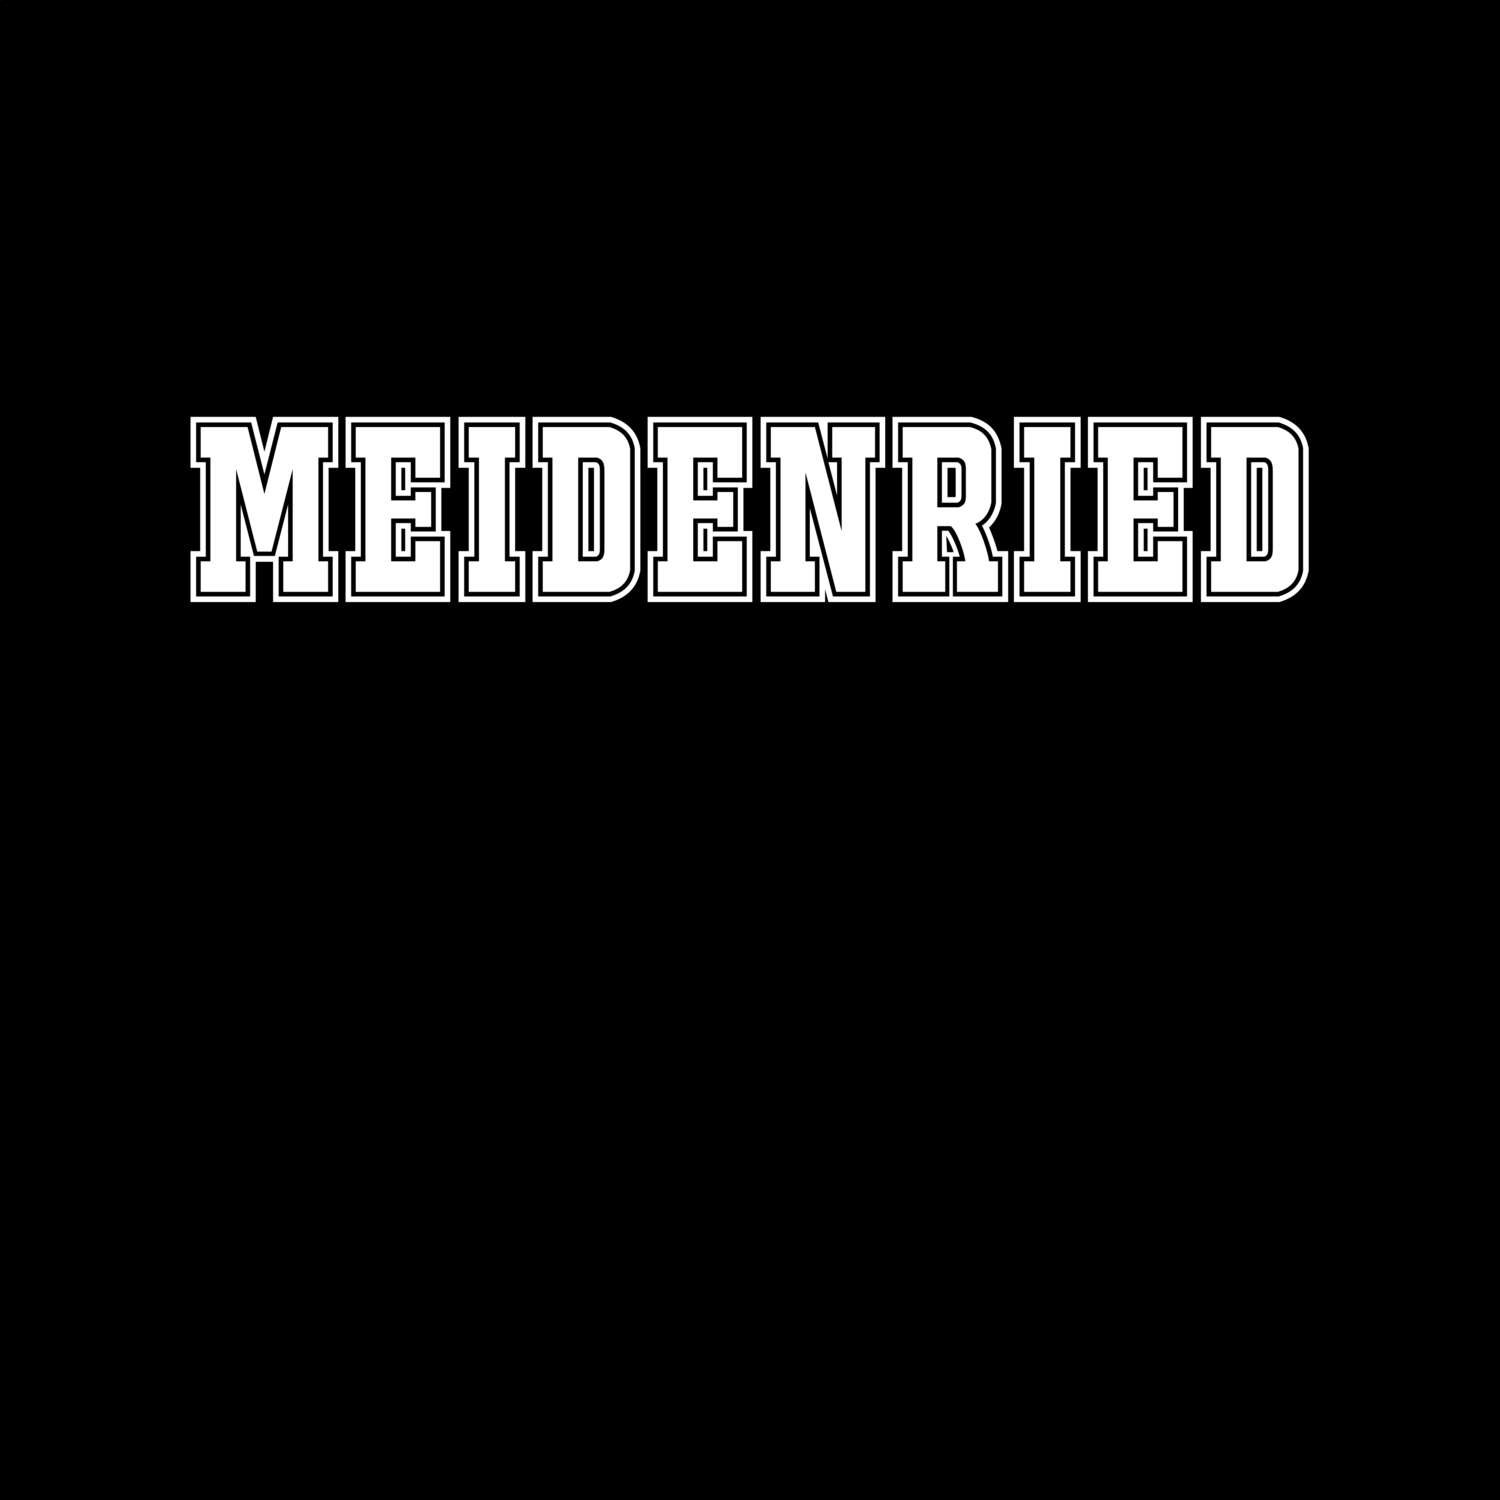 Meidenried T-Shirt »Classic«